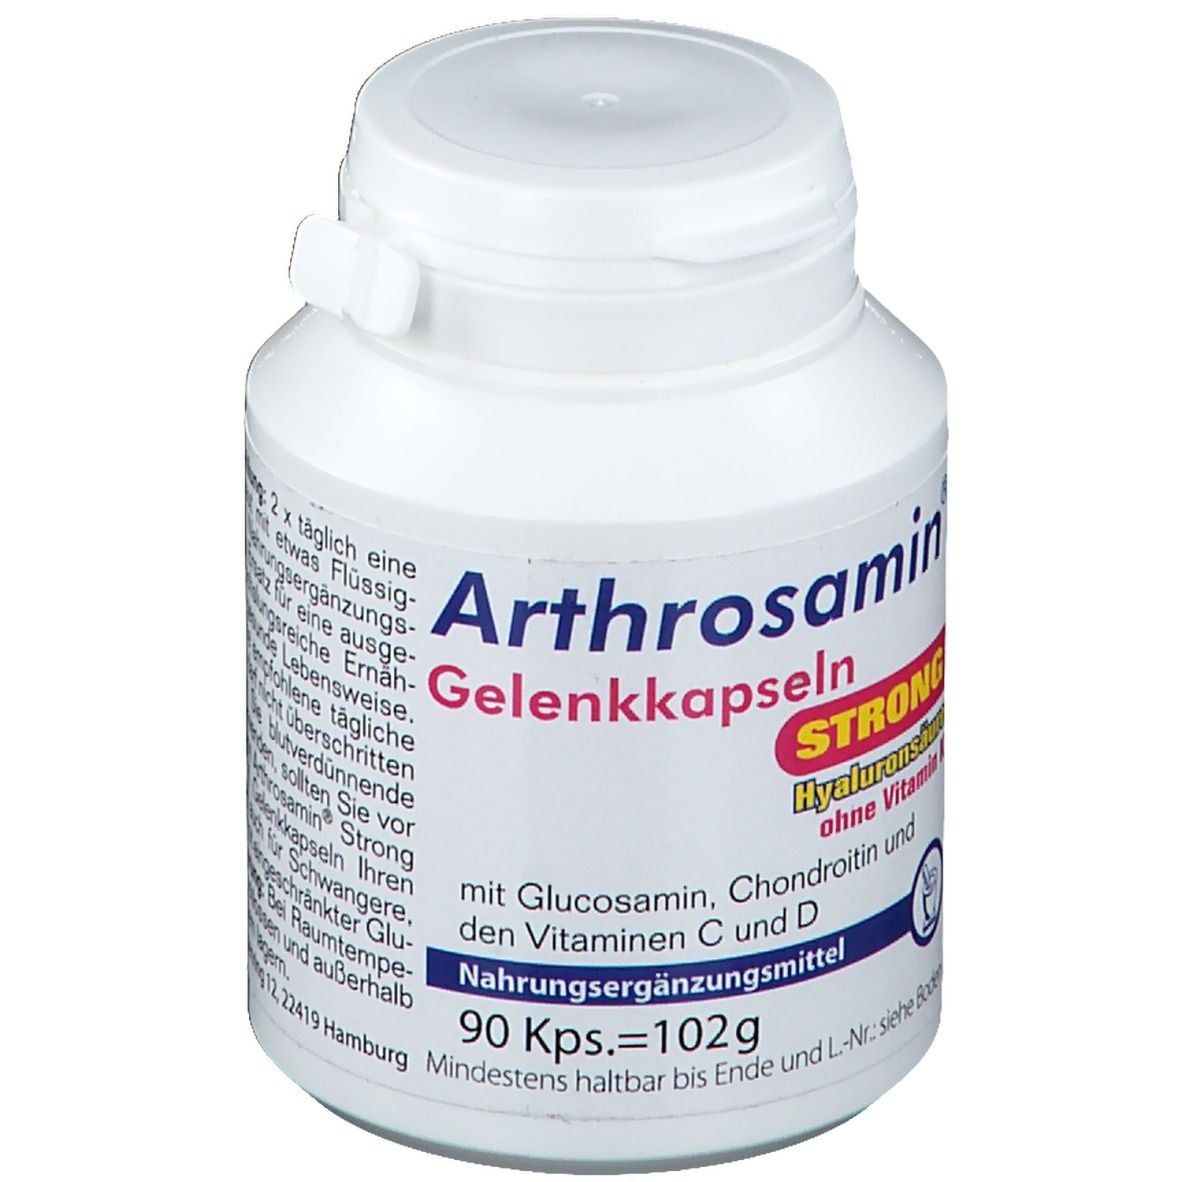 ARTHROSAMIN strong ohne Vitamin K Kapseln